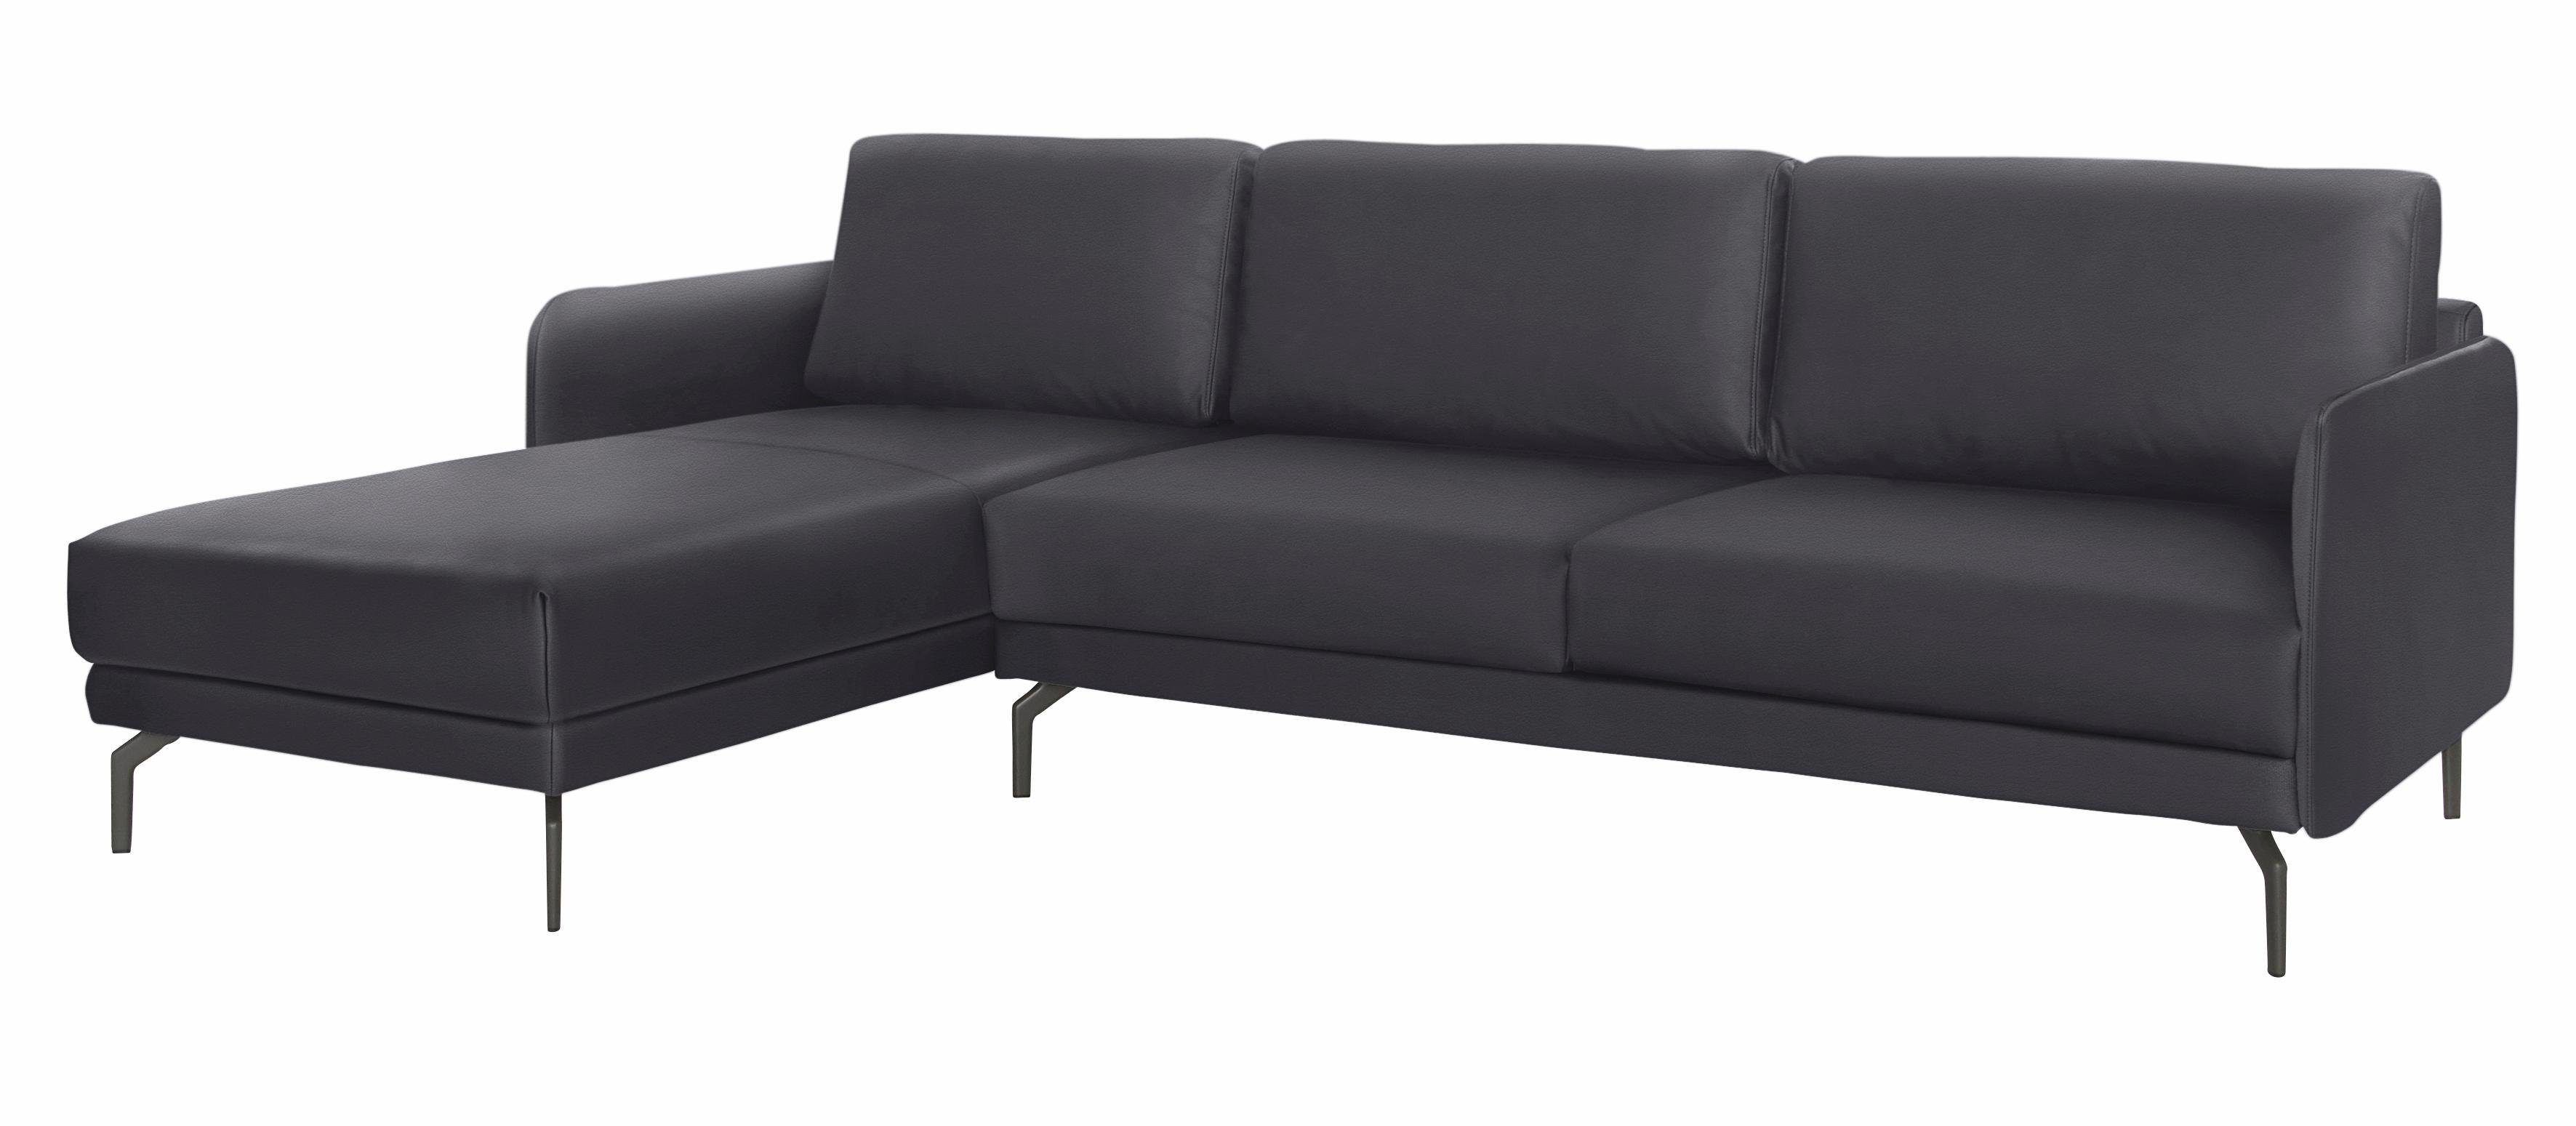 hülsta sofa Ecksofa hs.450, Armlehne sehr schmal, Breite 234 cm, Alugussfüße in umbragrau